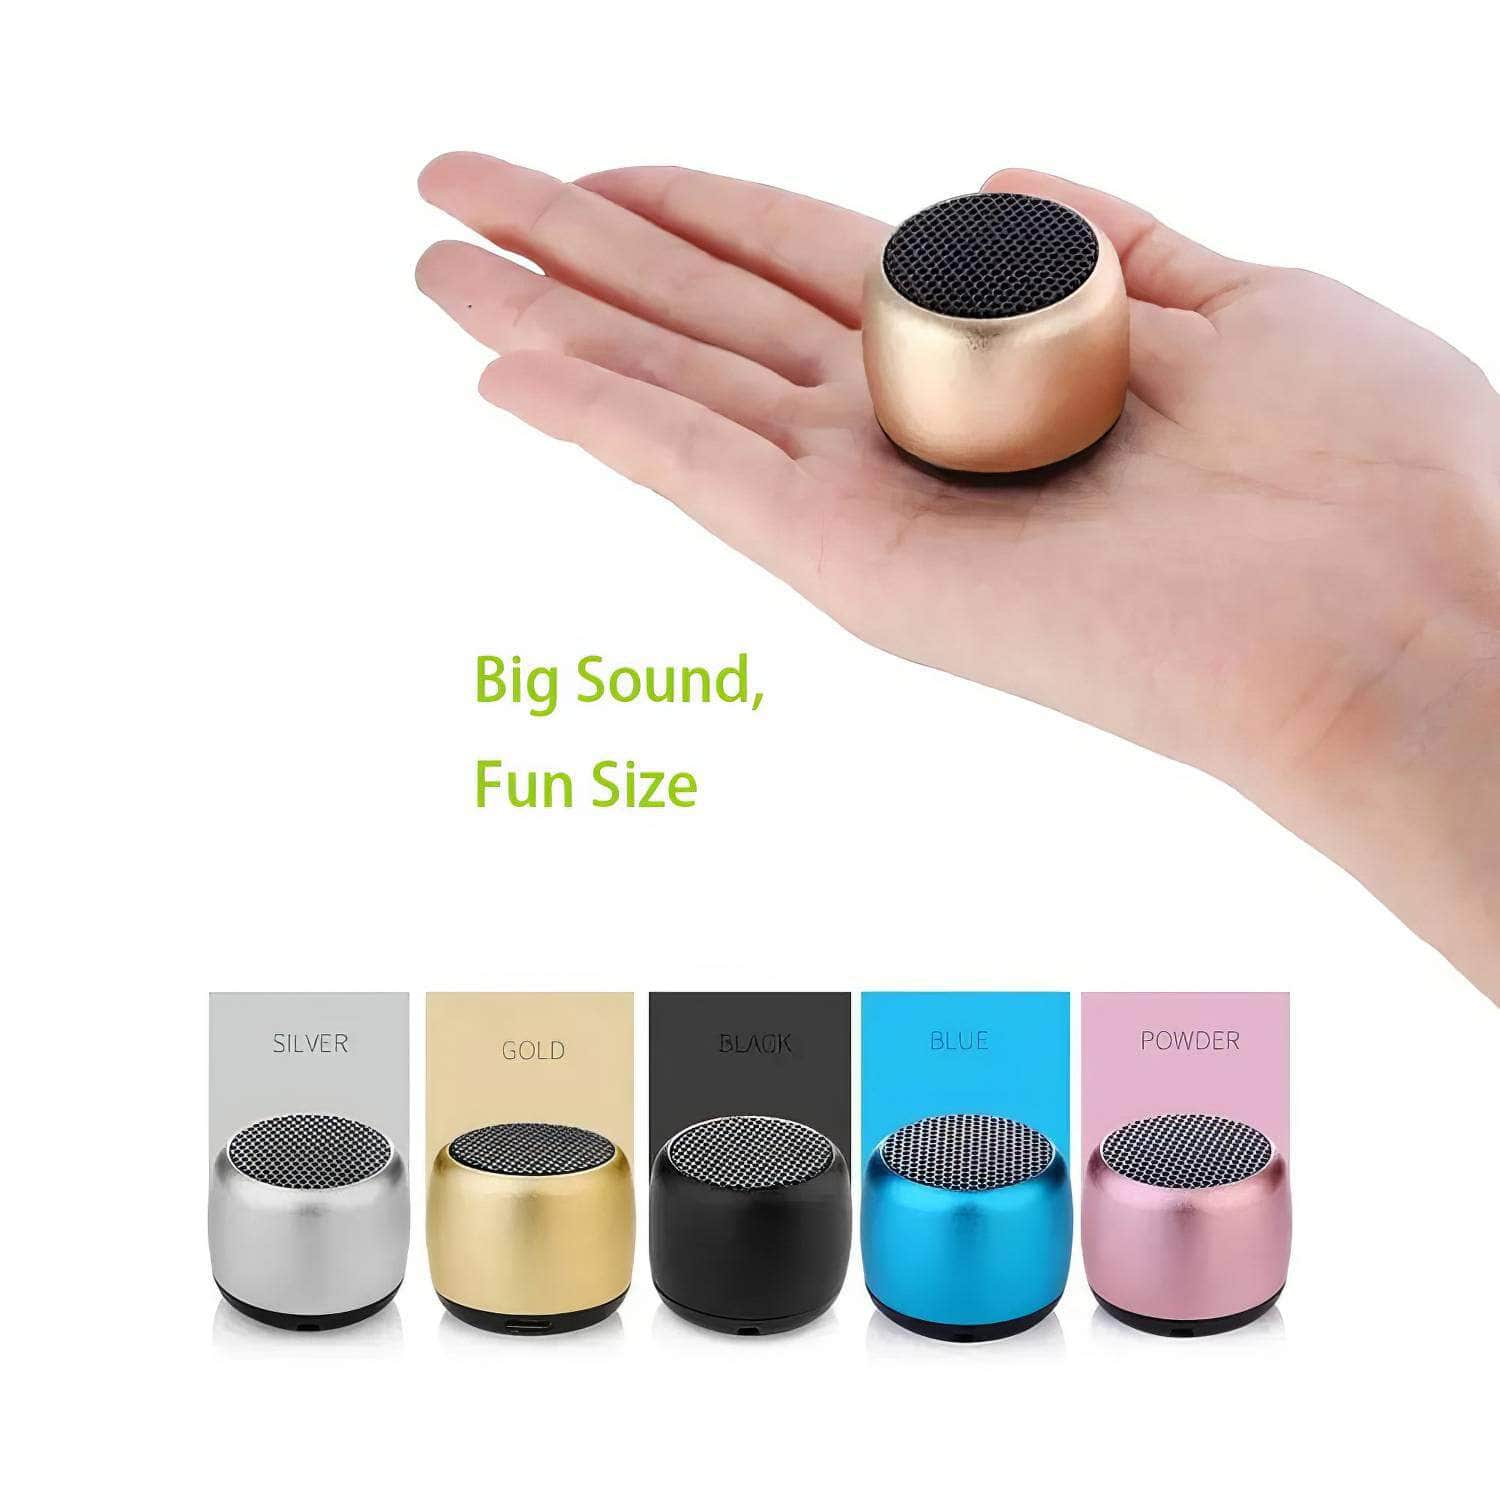 Mini Wireless Bluetooth Speaker: High-Quality Sound, Portable Speaker